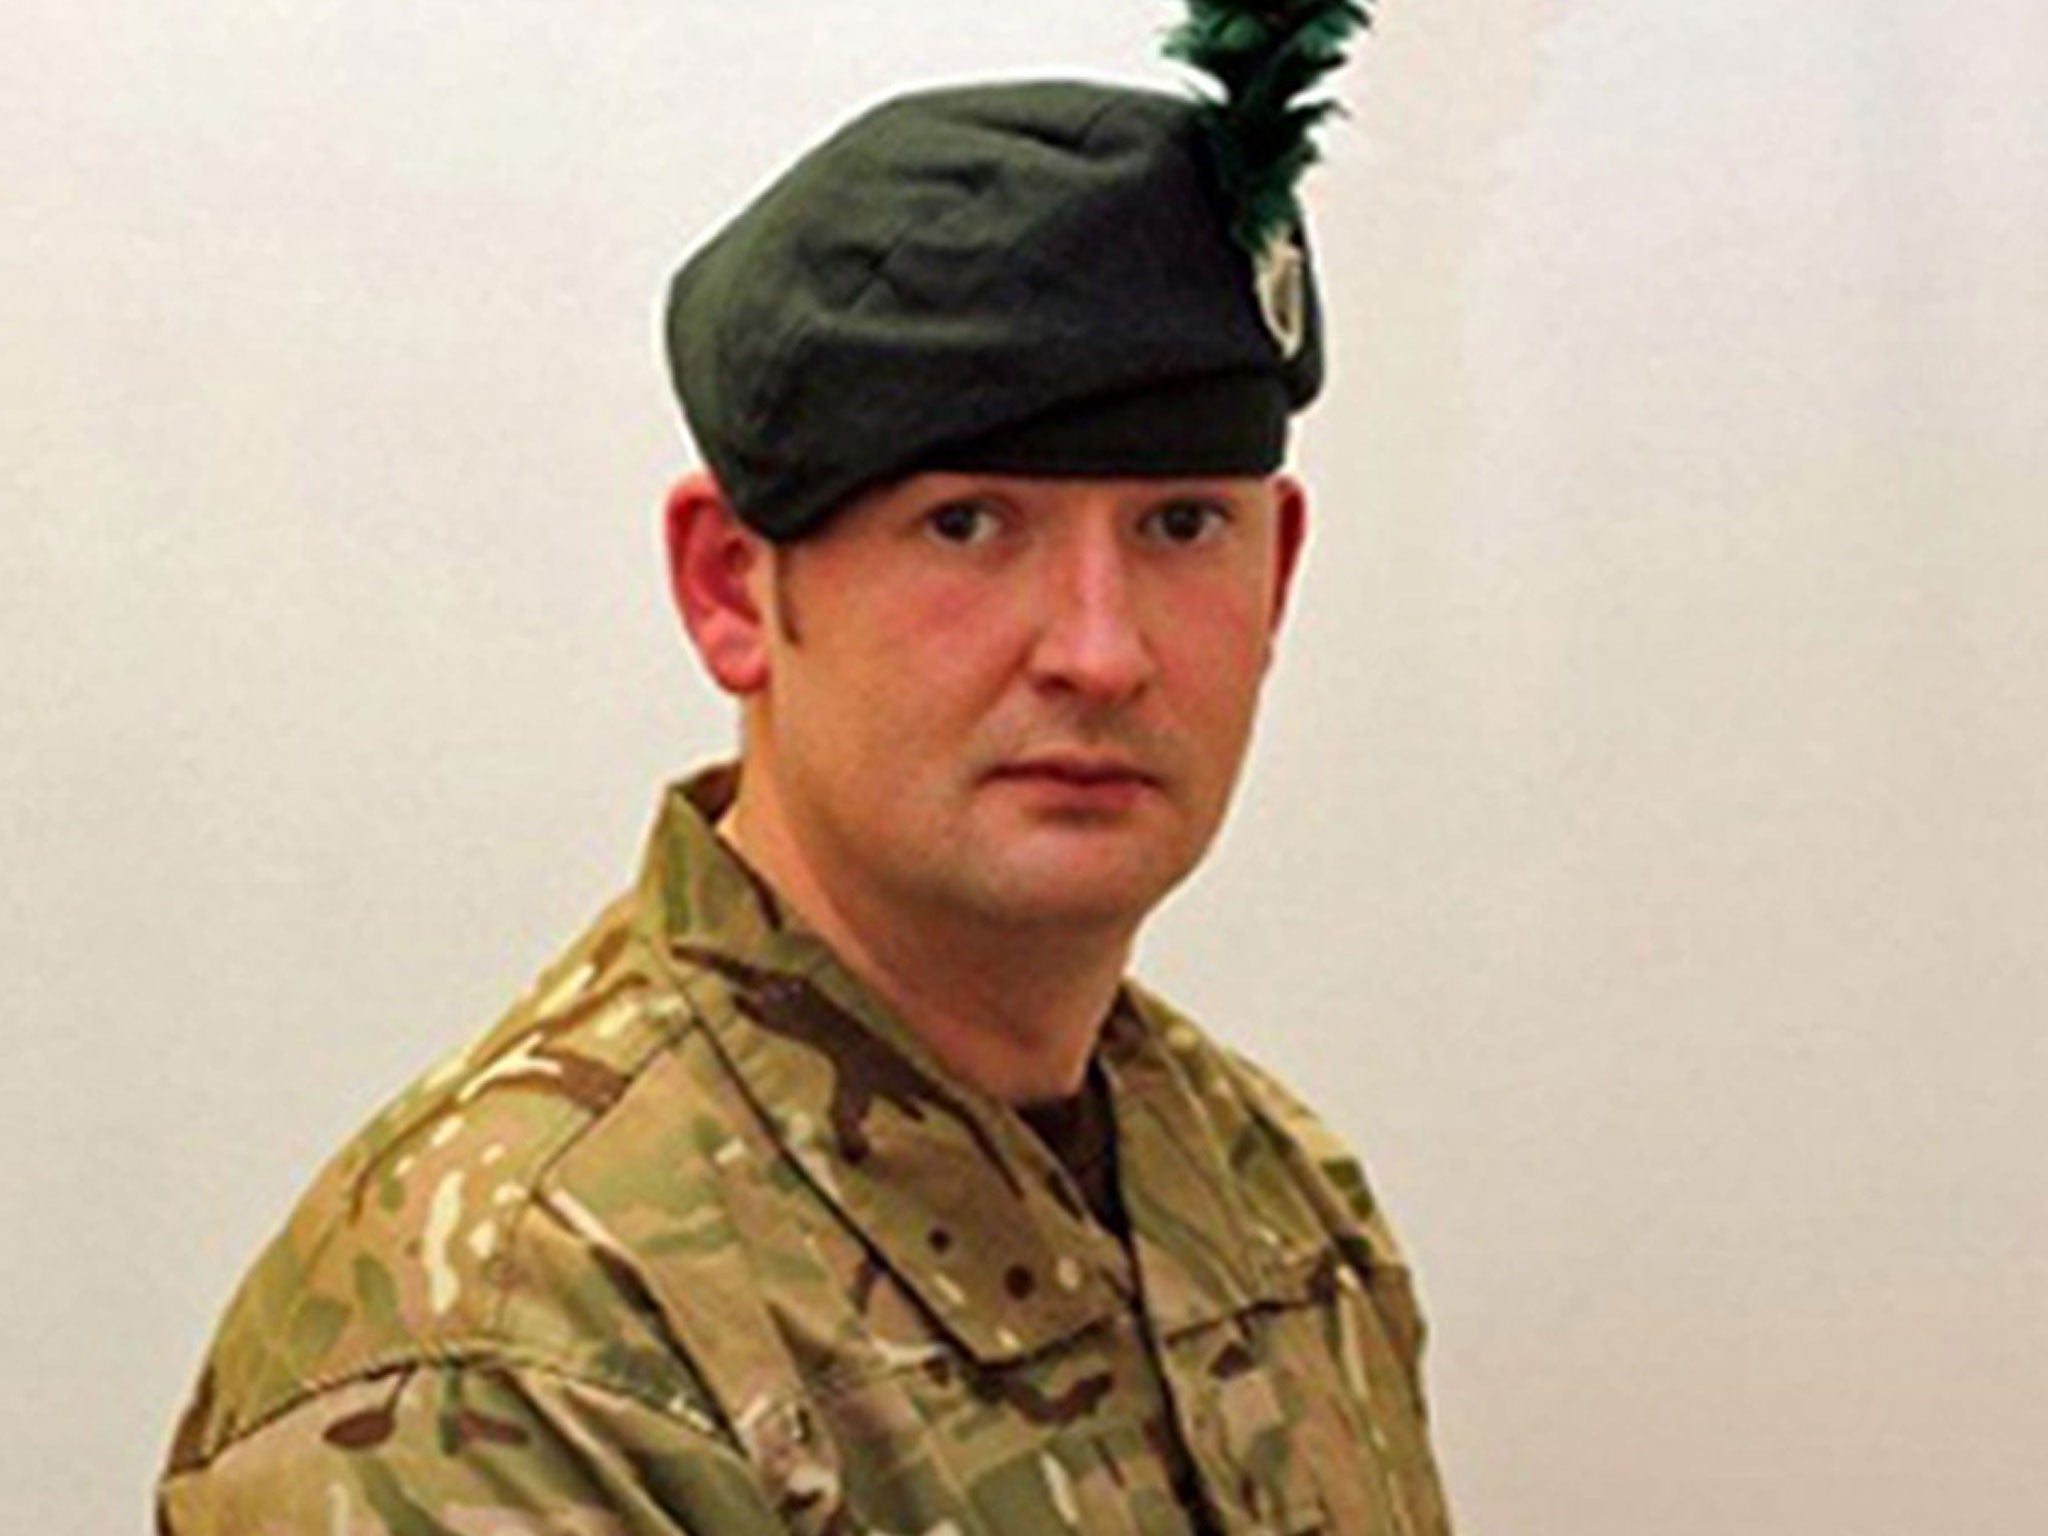 Corporal Geoffrey McNeill was found dead at Tern Hill Barracks in Shropshire